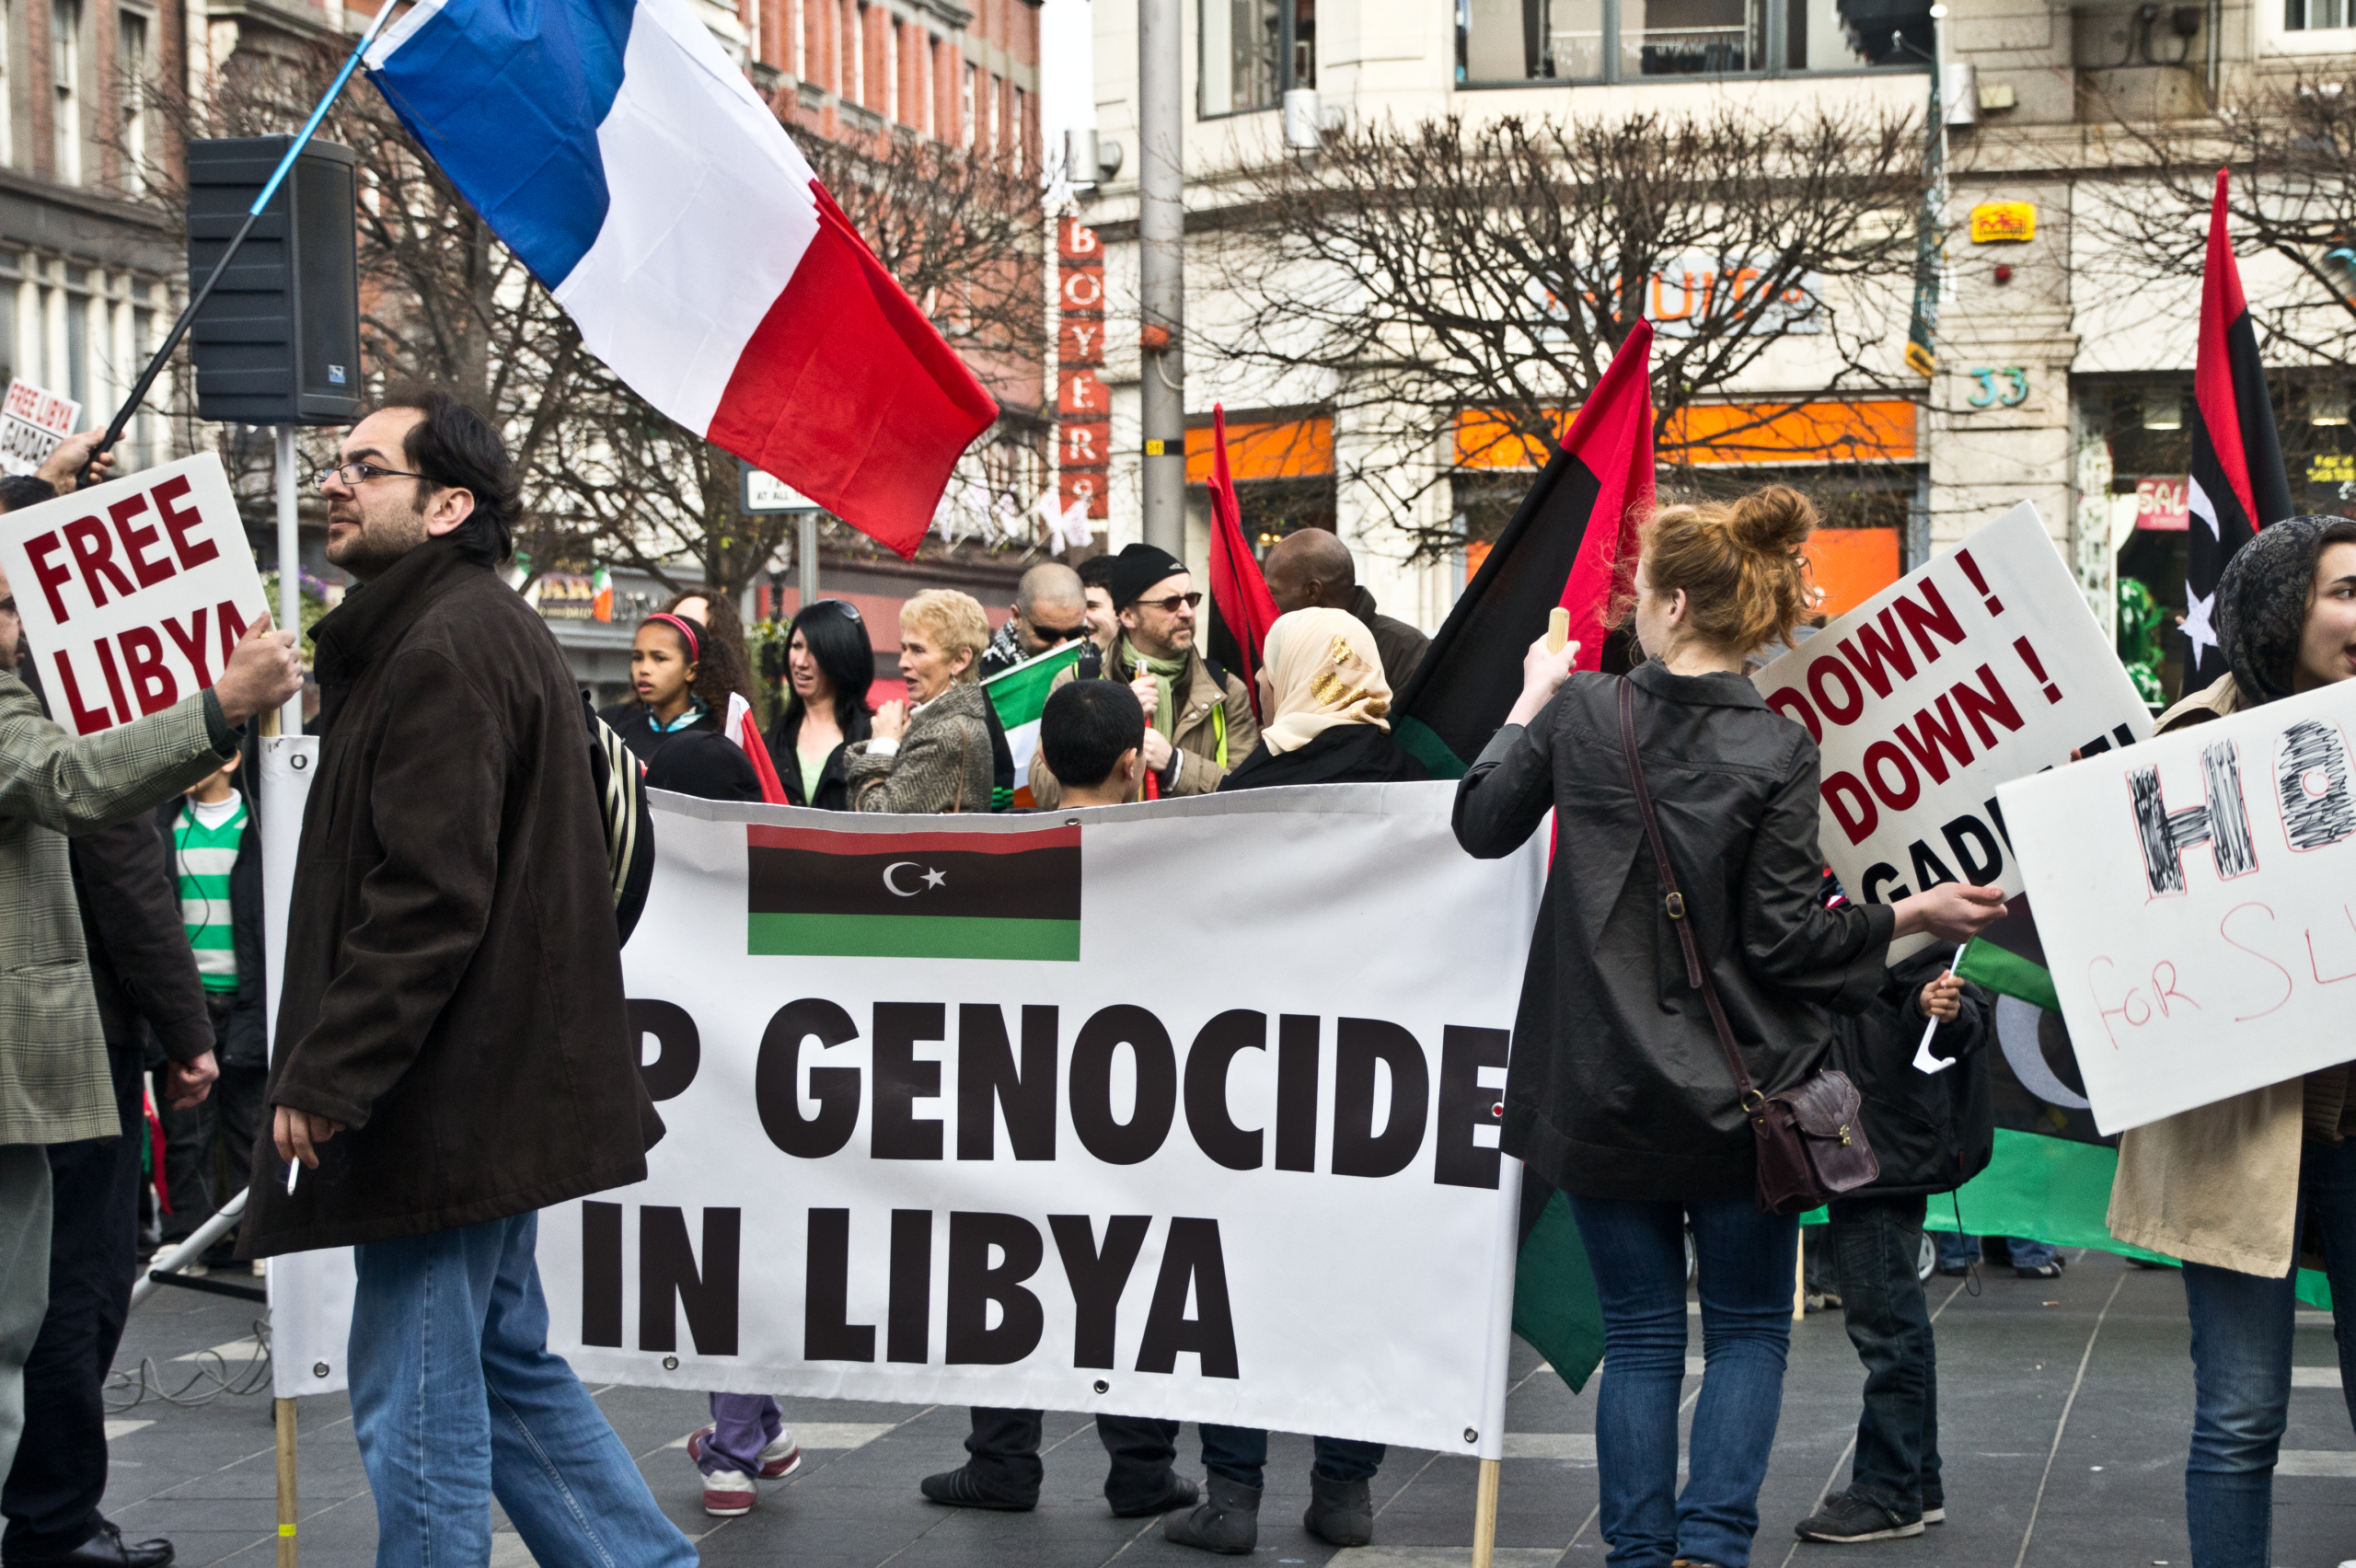 Tackling the Civil War in Libya